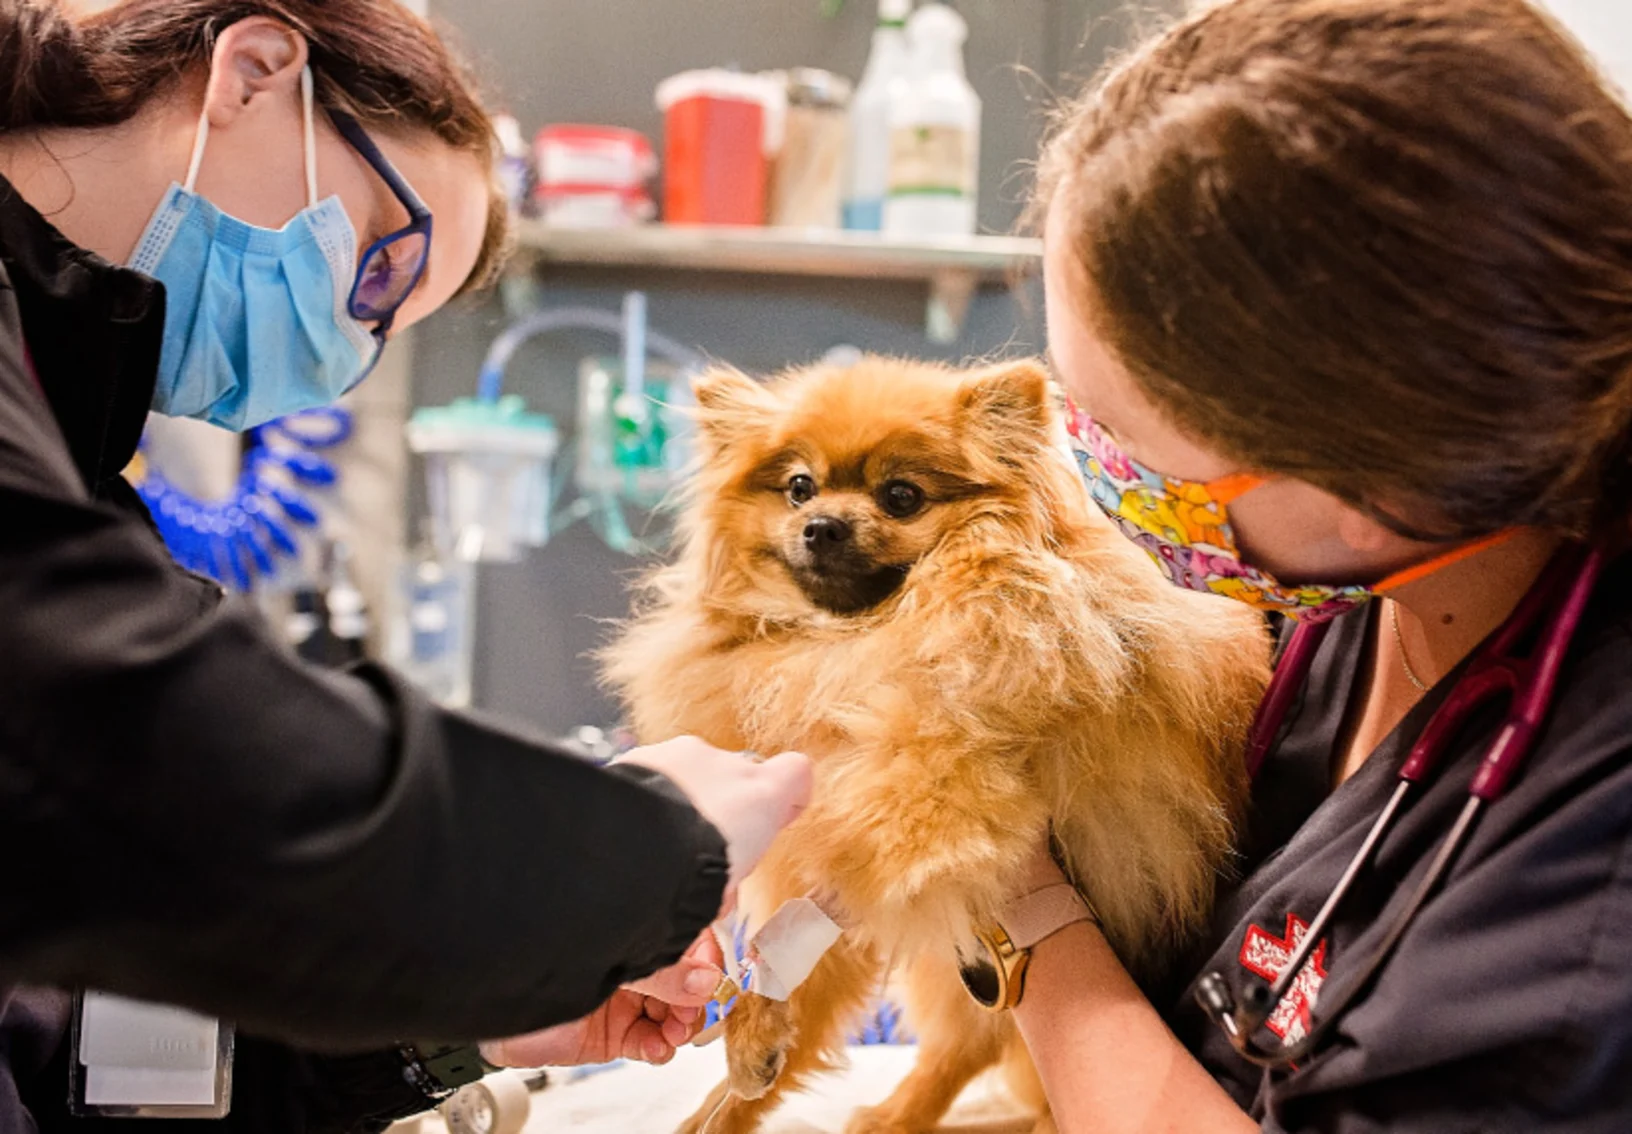 Staff with Dog at Veterinary Emergency & Specialty Hospital (VESH) Wichita